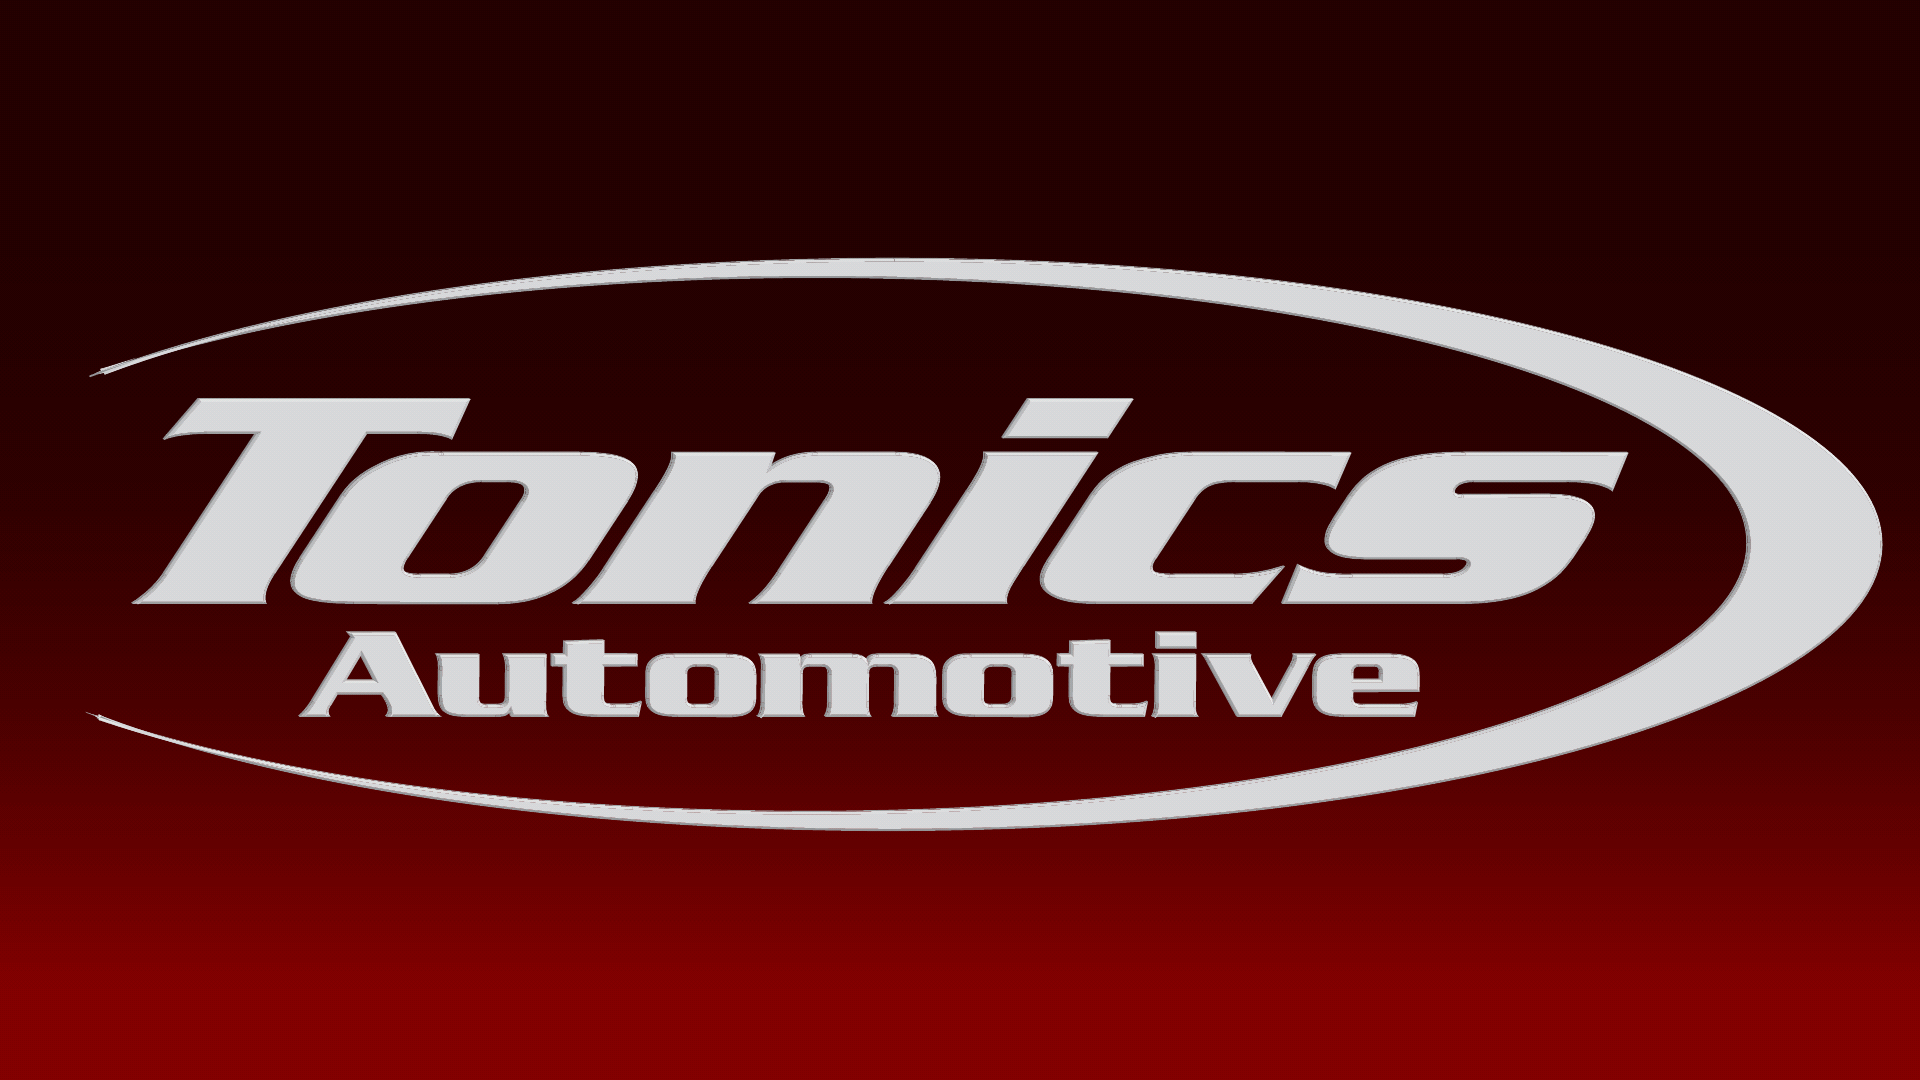 Tonic’s Automotive